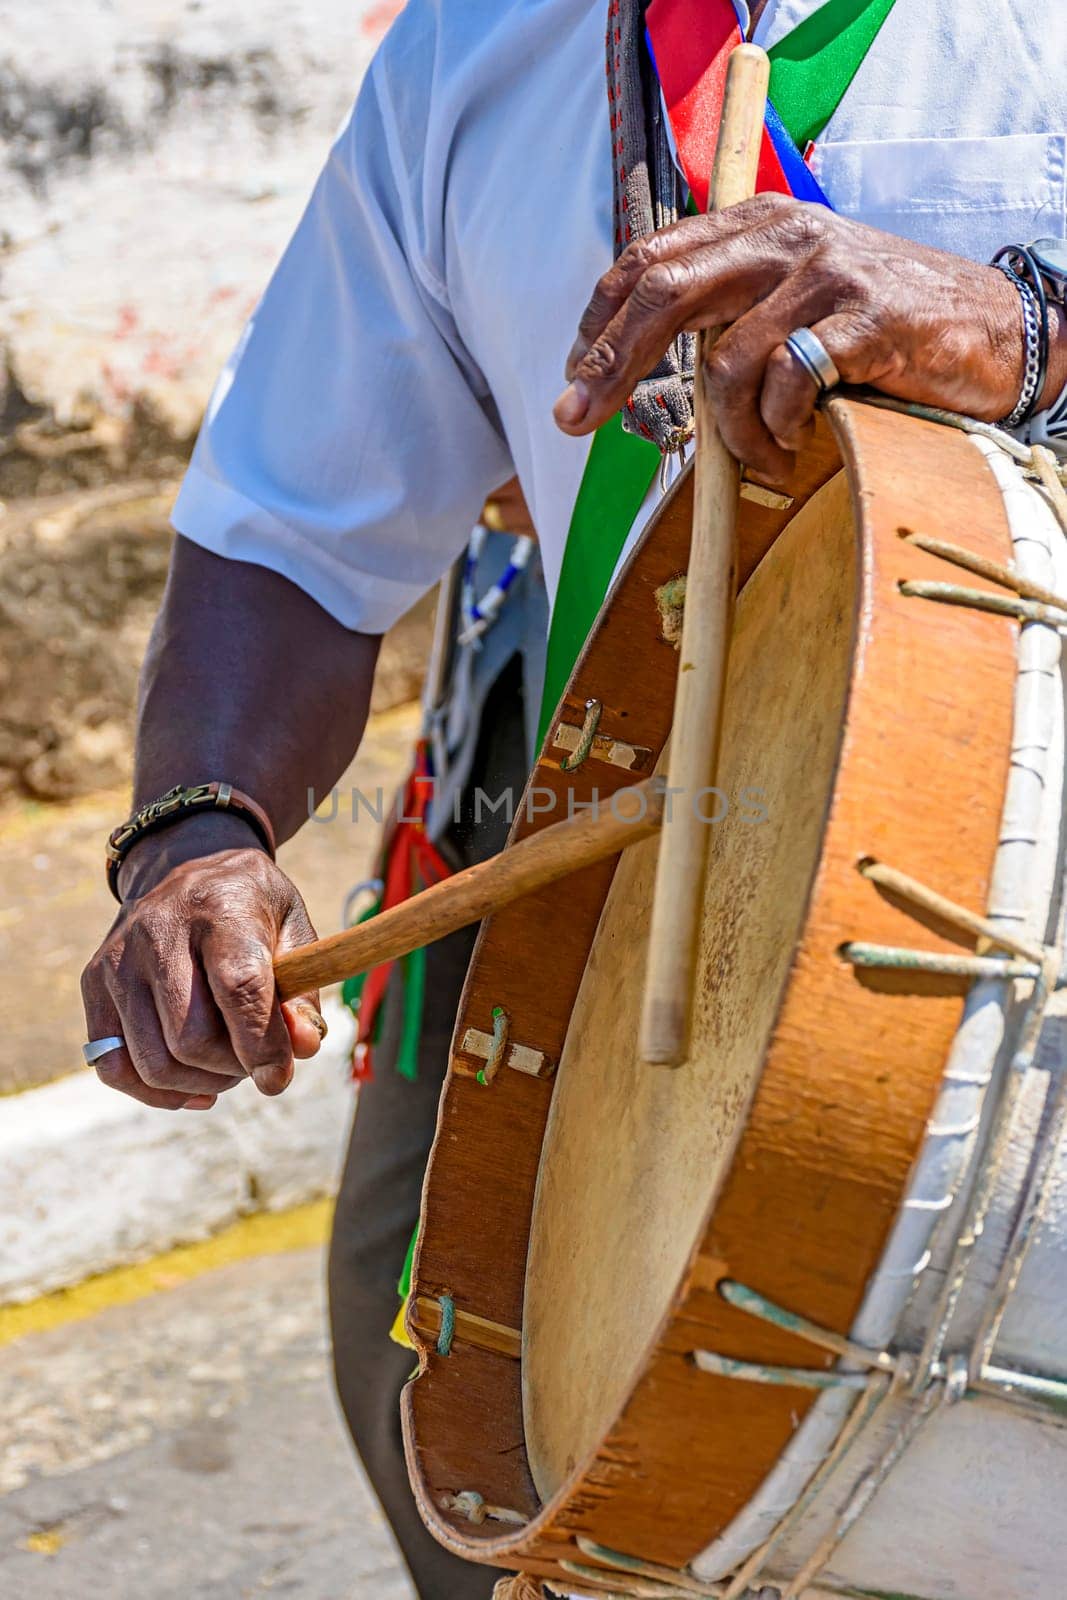 Ethnic drums used in religious festival in Lagoa Santa, Minas Gerais by Fred_Pinheiro